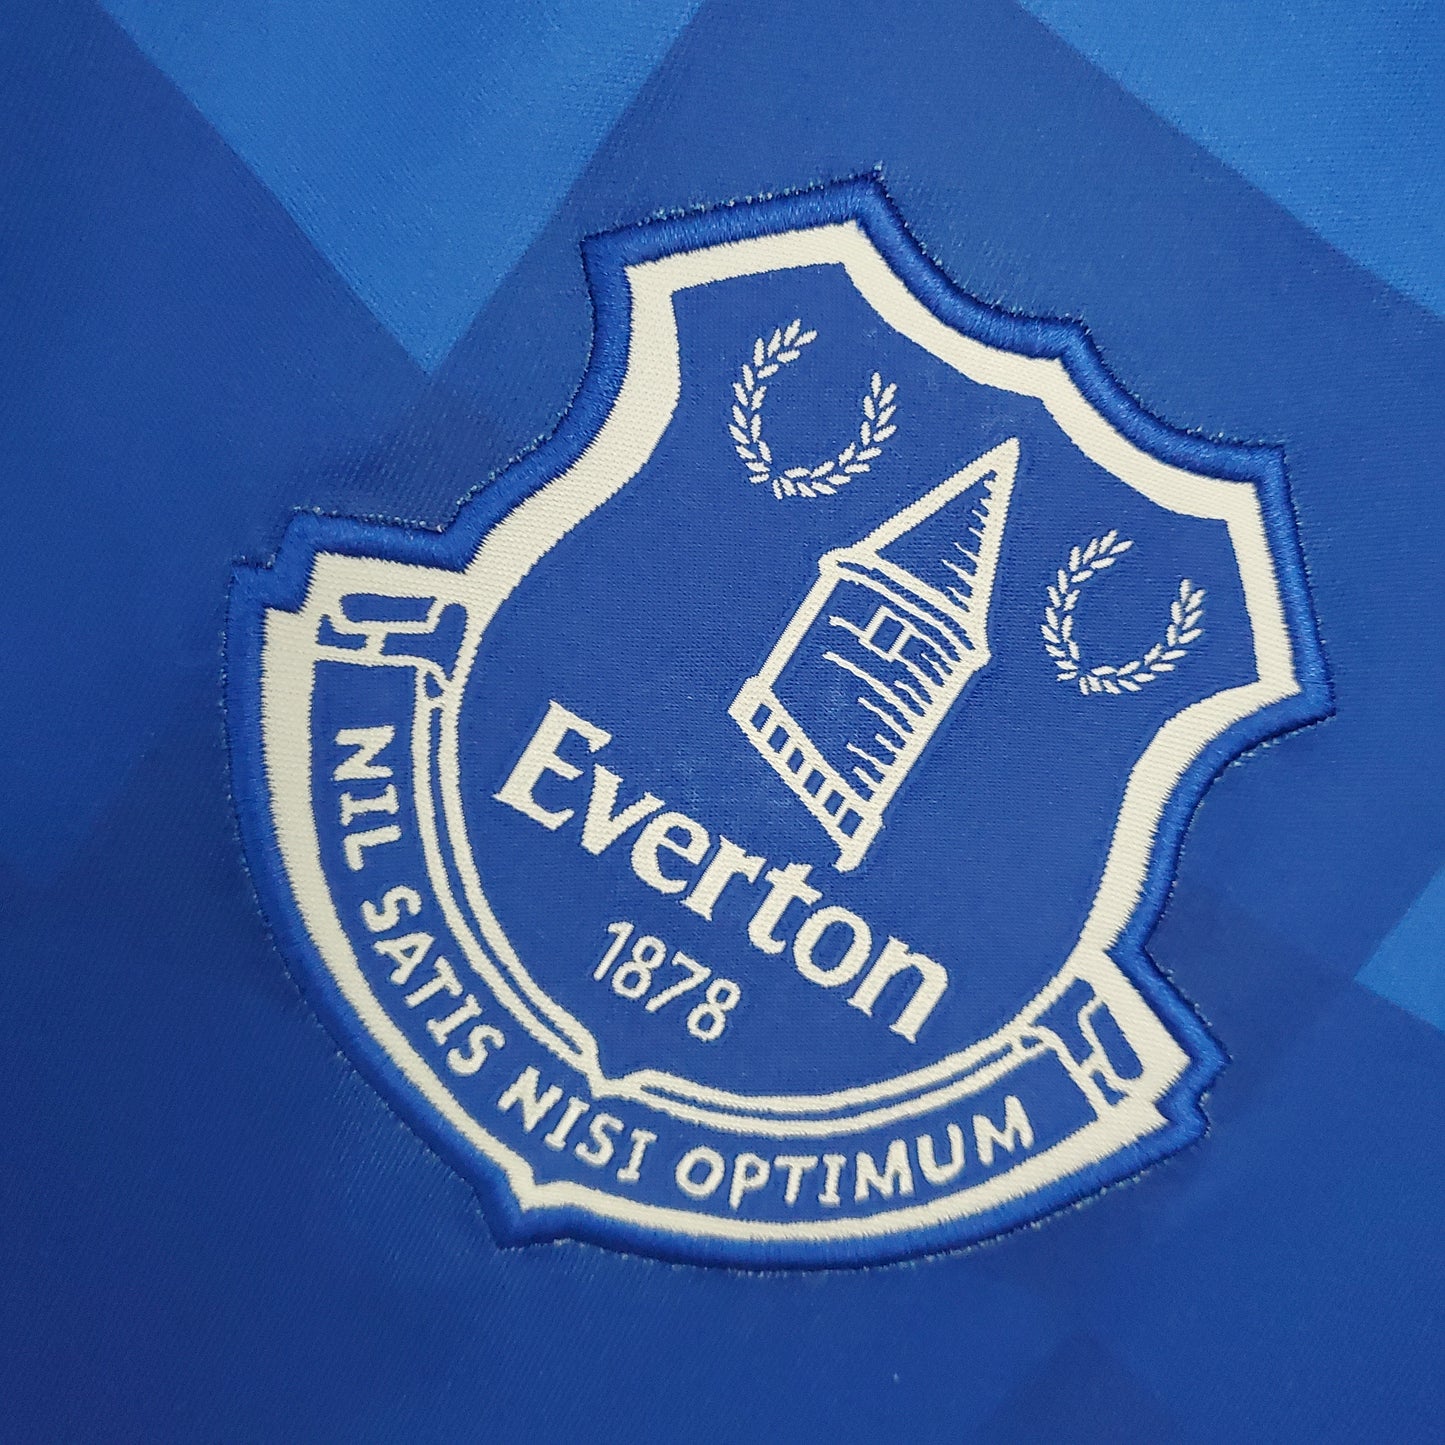 Everton 21-22 Home Shirt